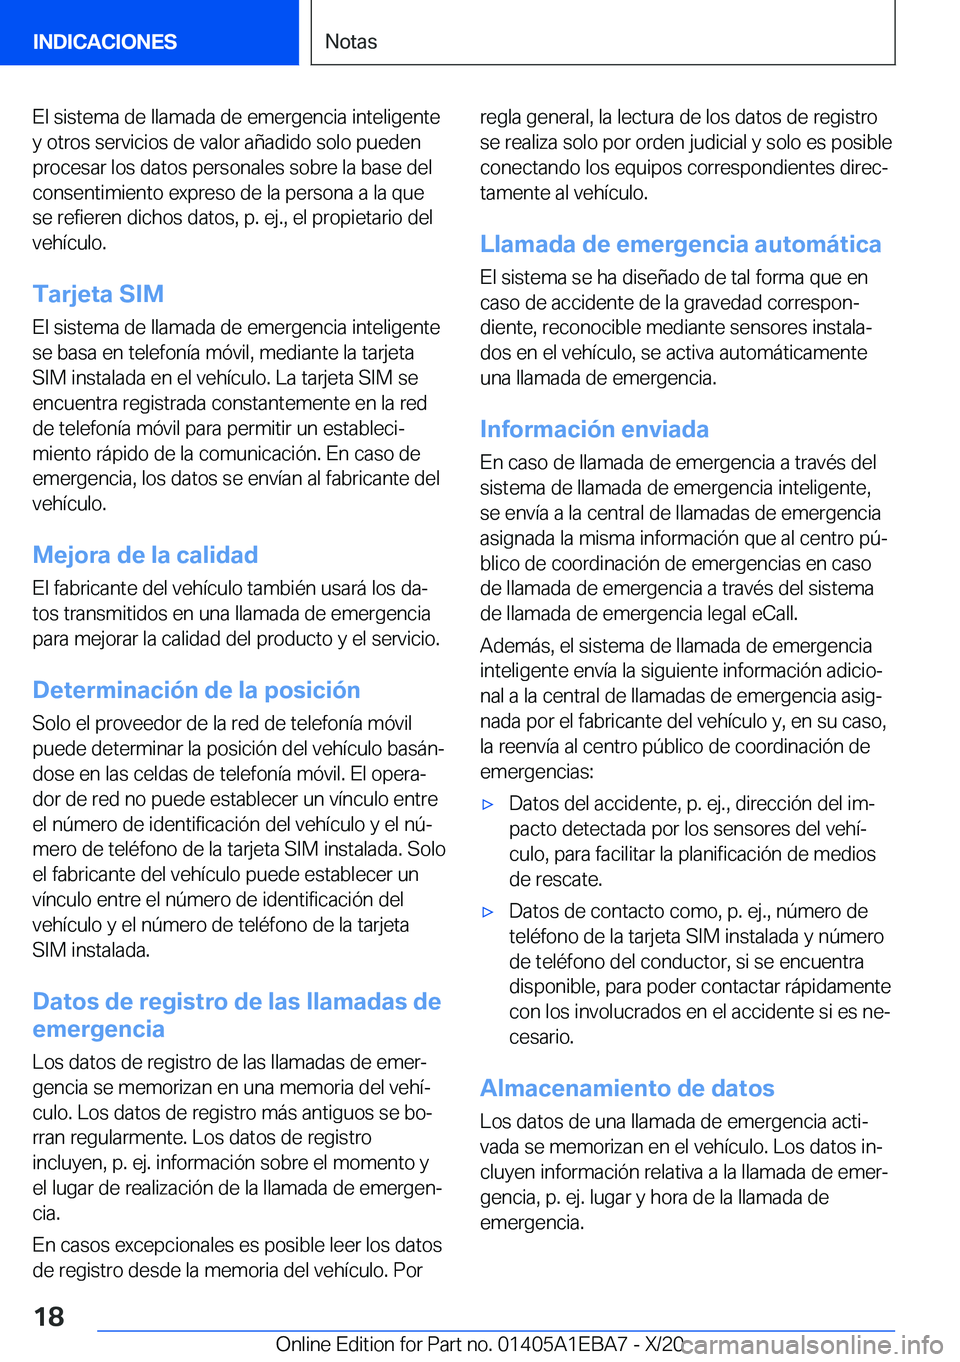 BMW 3 SERIES 2021  Manuales de Empleo (in Spanish) �E�l��s�i�s�t�e�m�a��d�e��l�l�a�m�a�d�a��d�e��e�m�e�r�g�e�n�c�i�a��i�n�t�e�l�i�g�e�n�t�e�y��o�t�r�o�s��s�e�r�v�i�c�i�o�s��d�e��v�a�l�o�r��a�